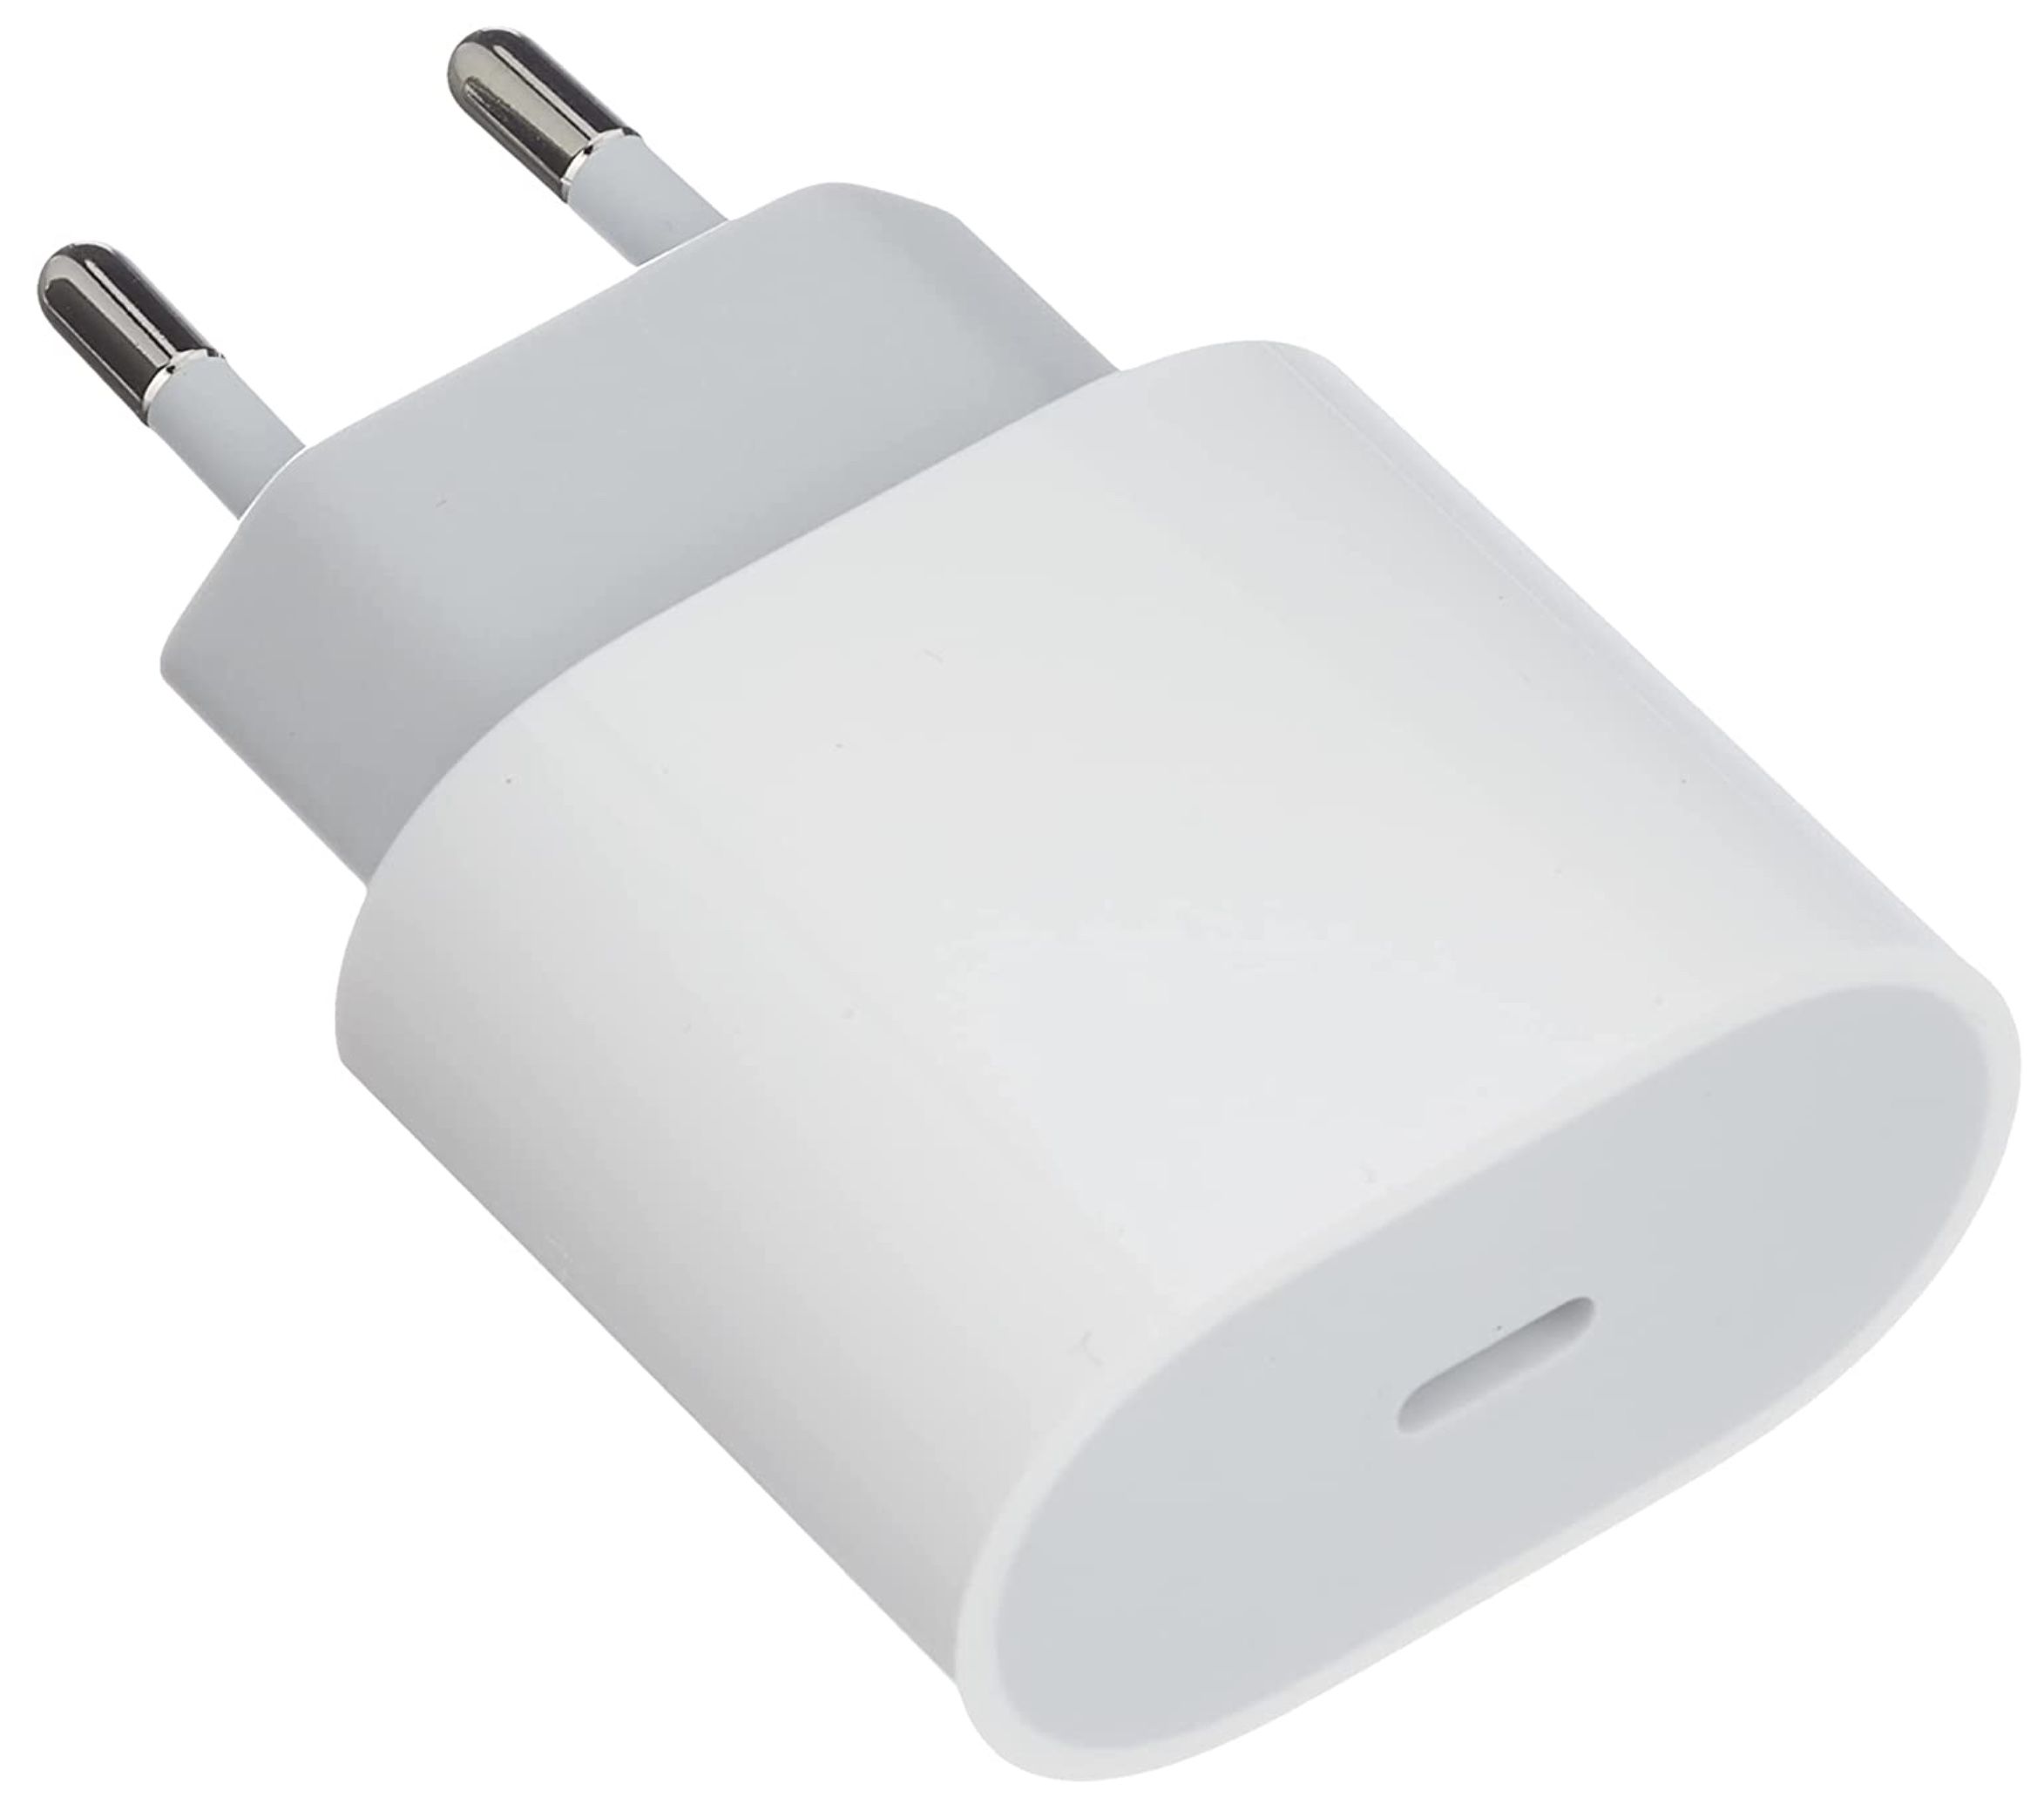 Apple 20W USB C Power Adapter für 13,31€ (statt 17€)   Prime